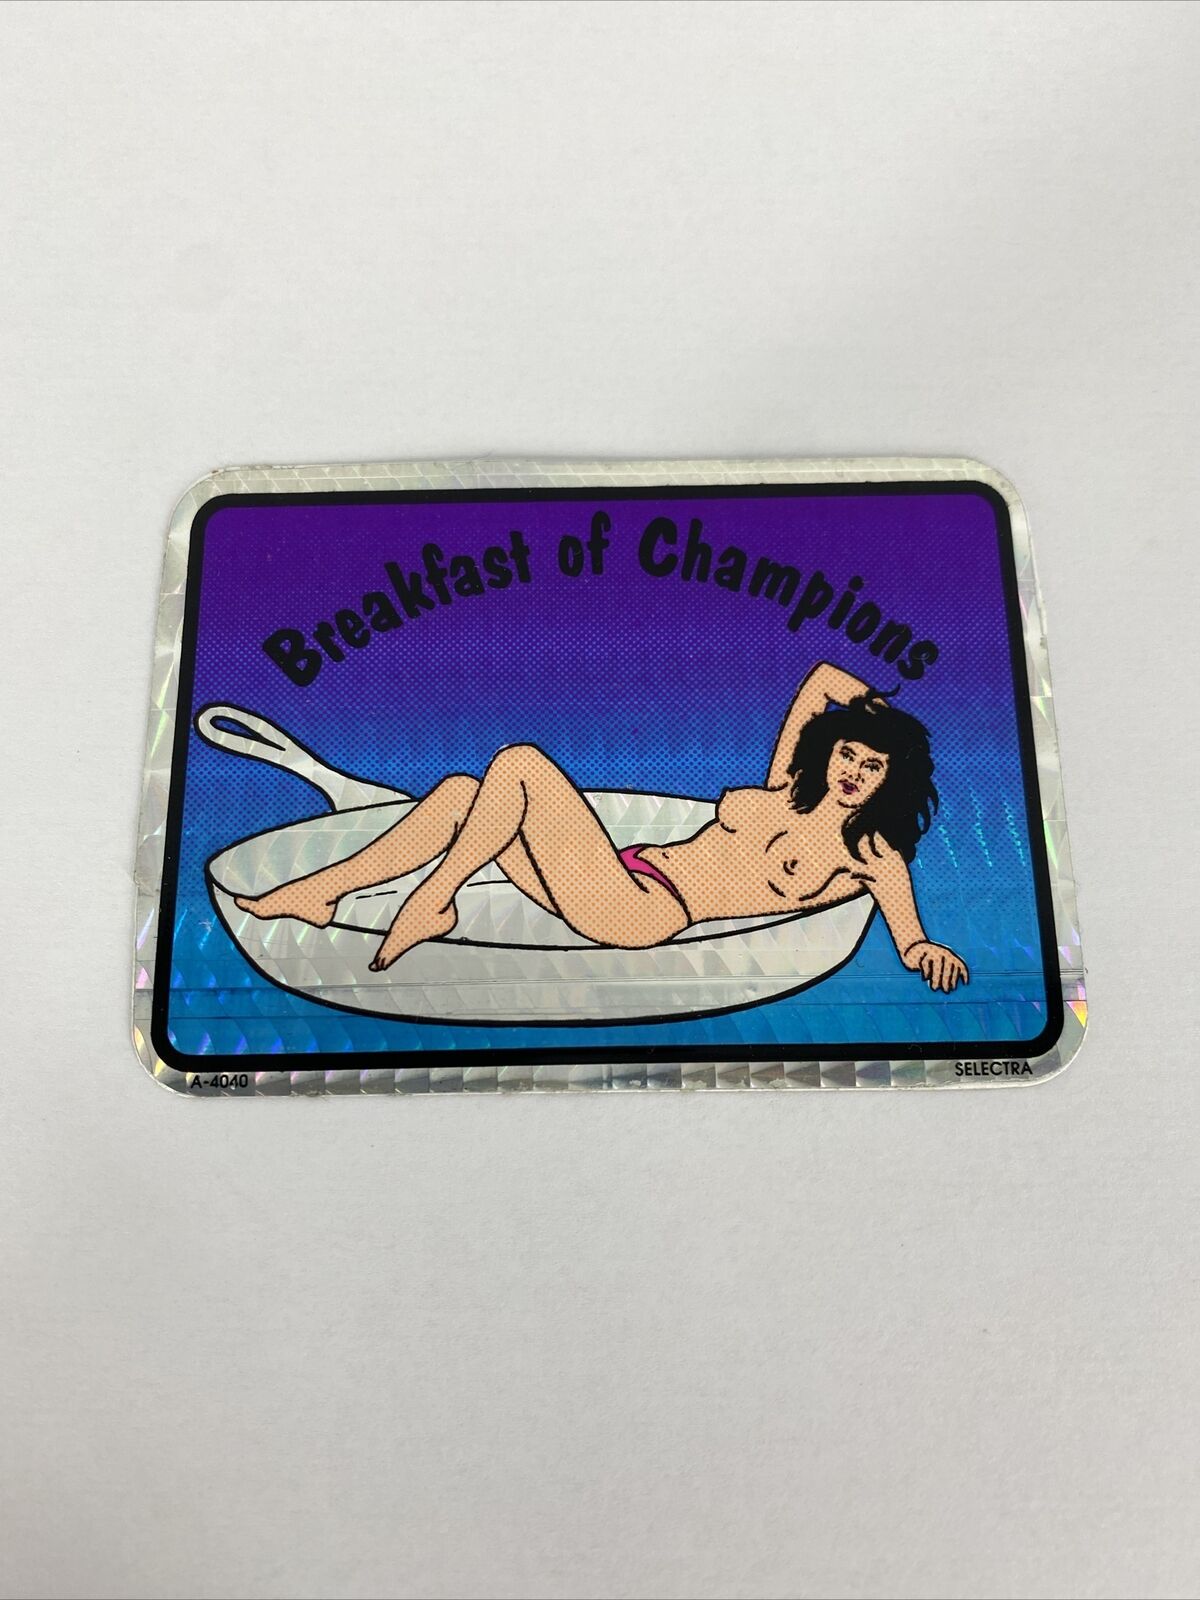 Adult Humor RARE Vintage Breakfast of Champions Prism Vending Machine Sticker